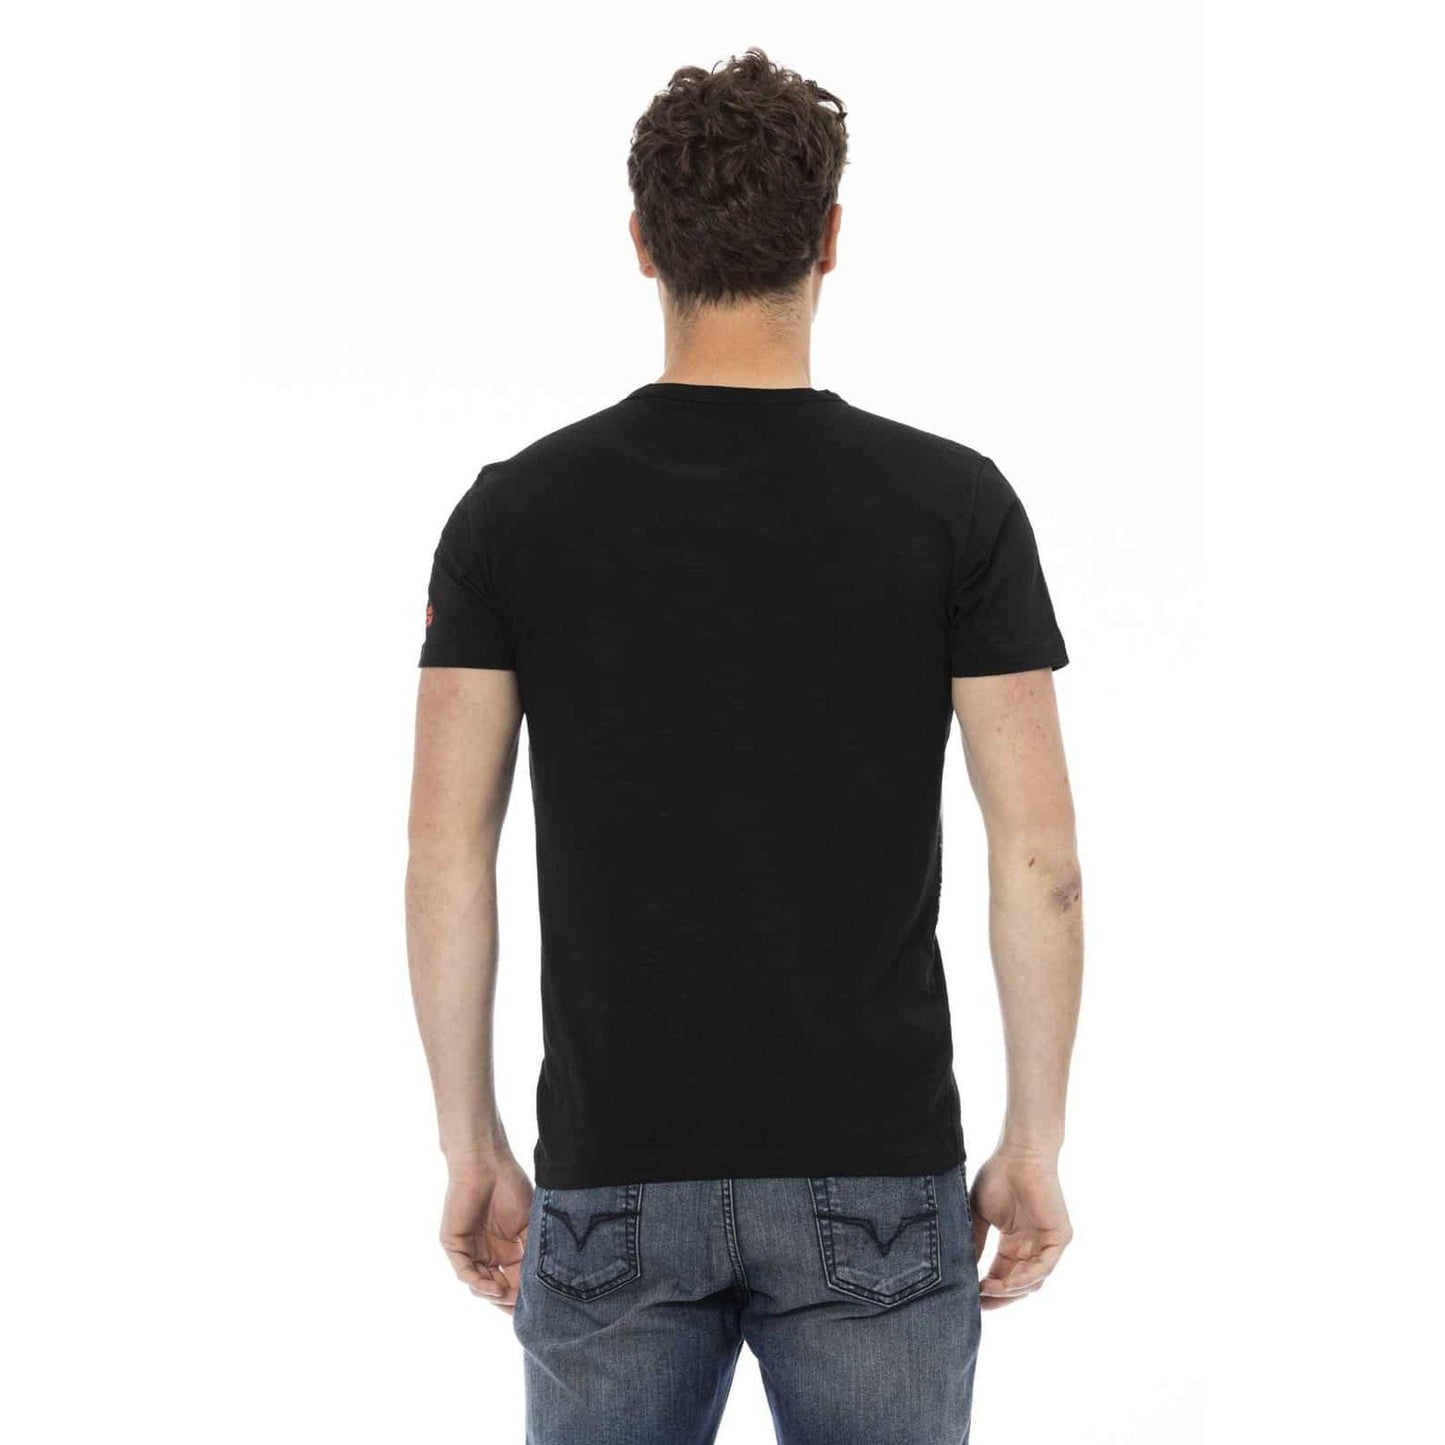 Trussardi Action Men T-shirts - Black Brand T-shirts - T-Shirt - Guocali